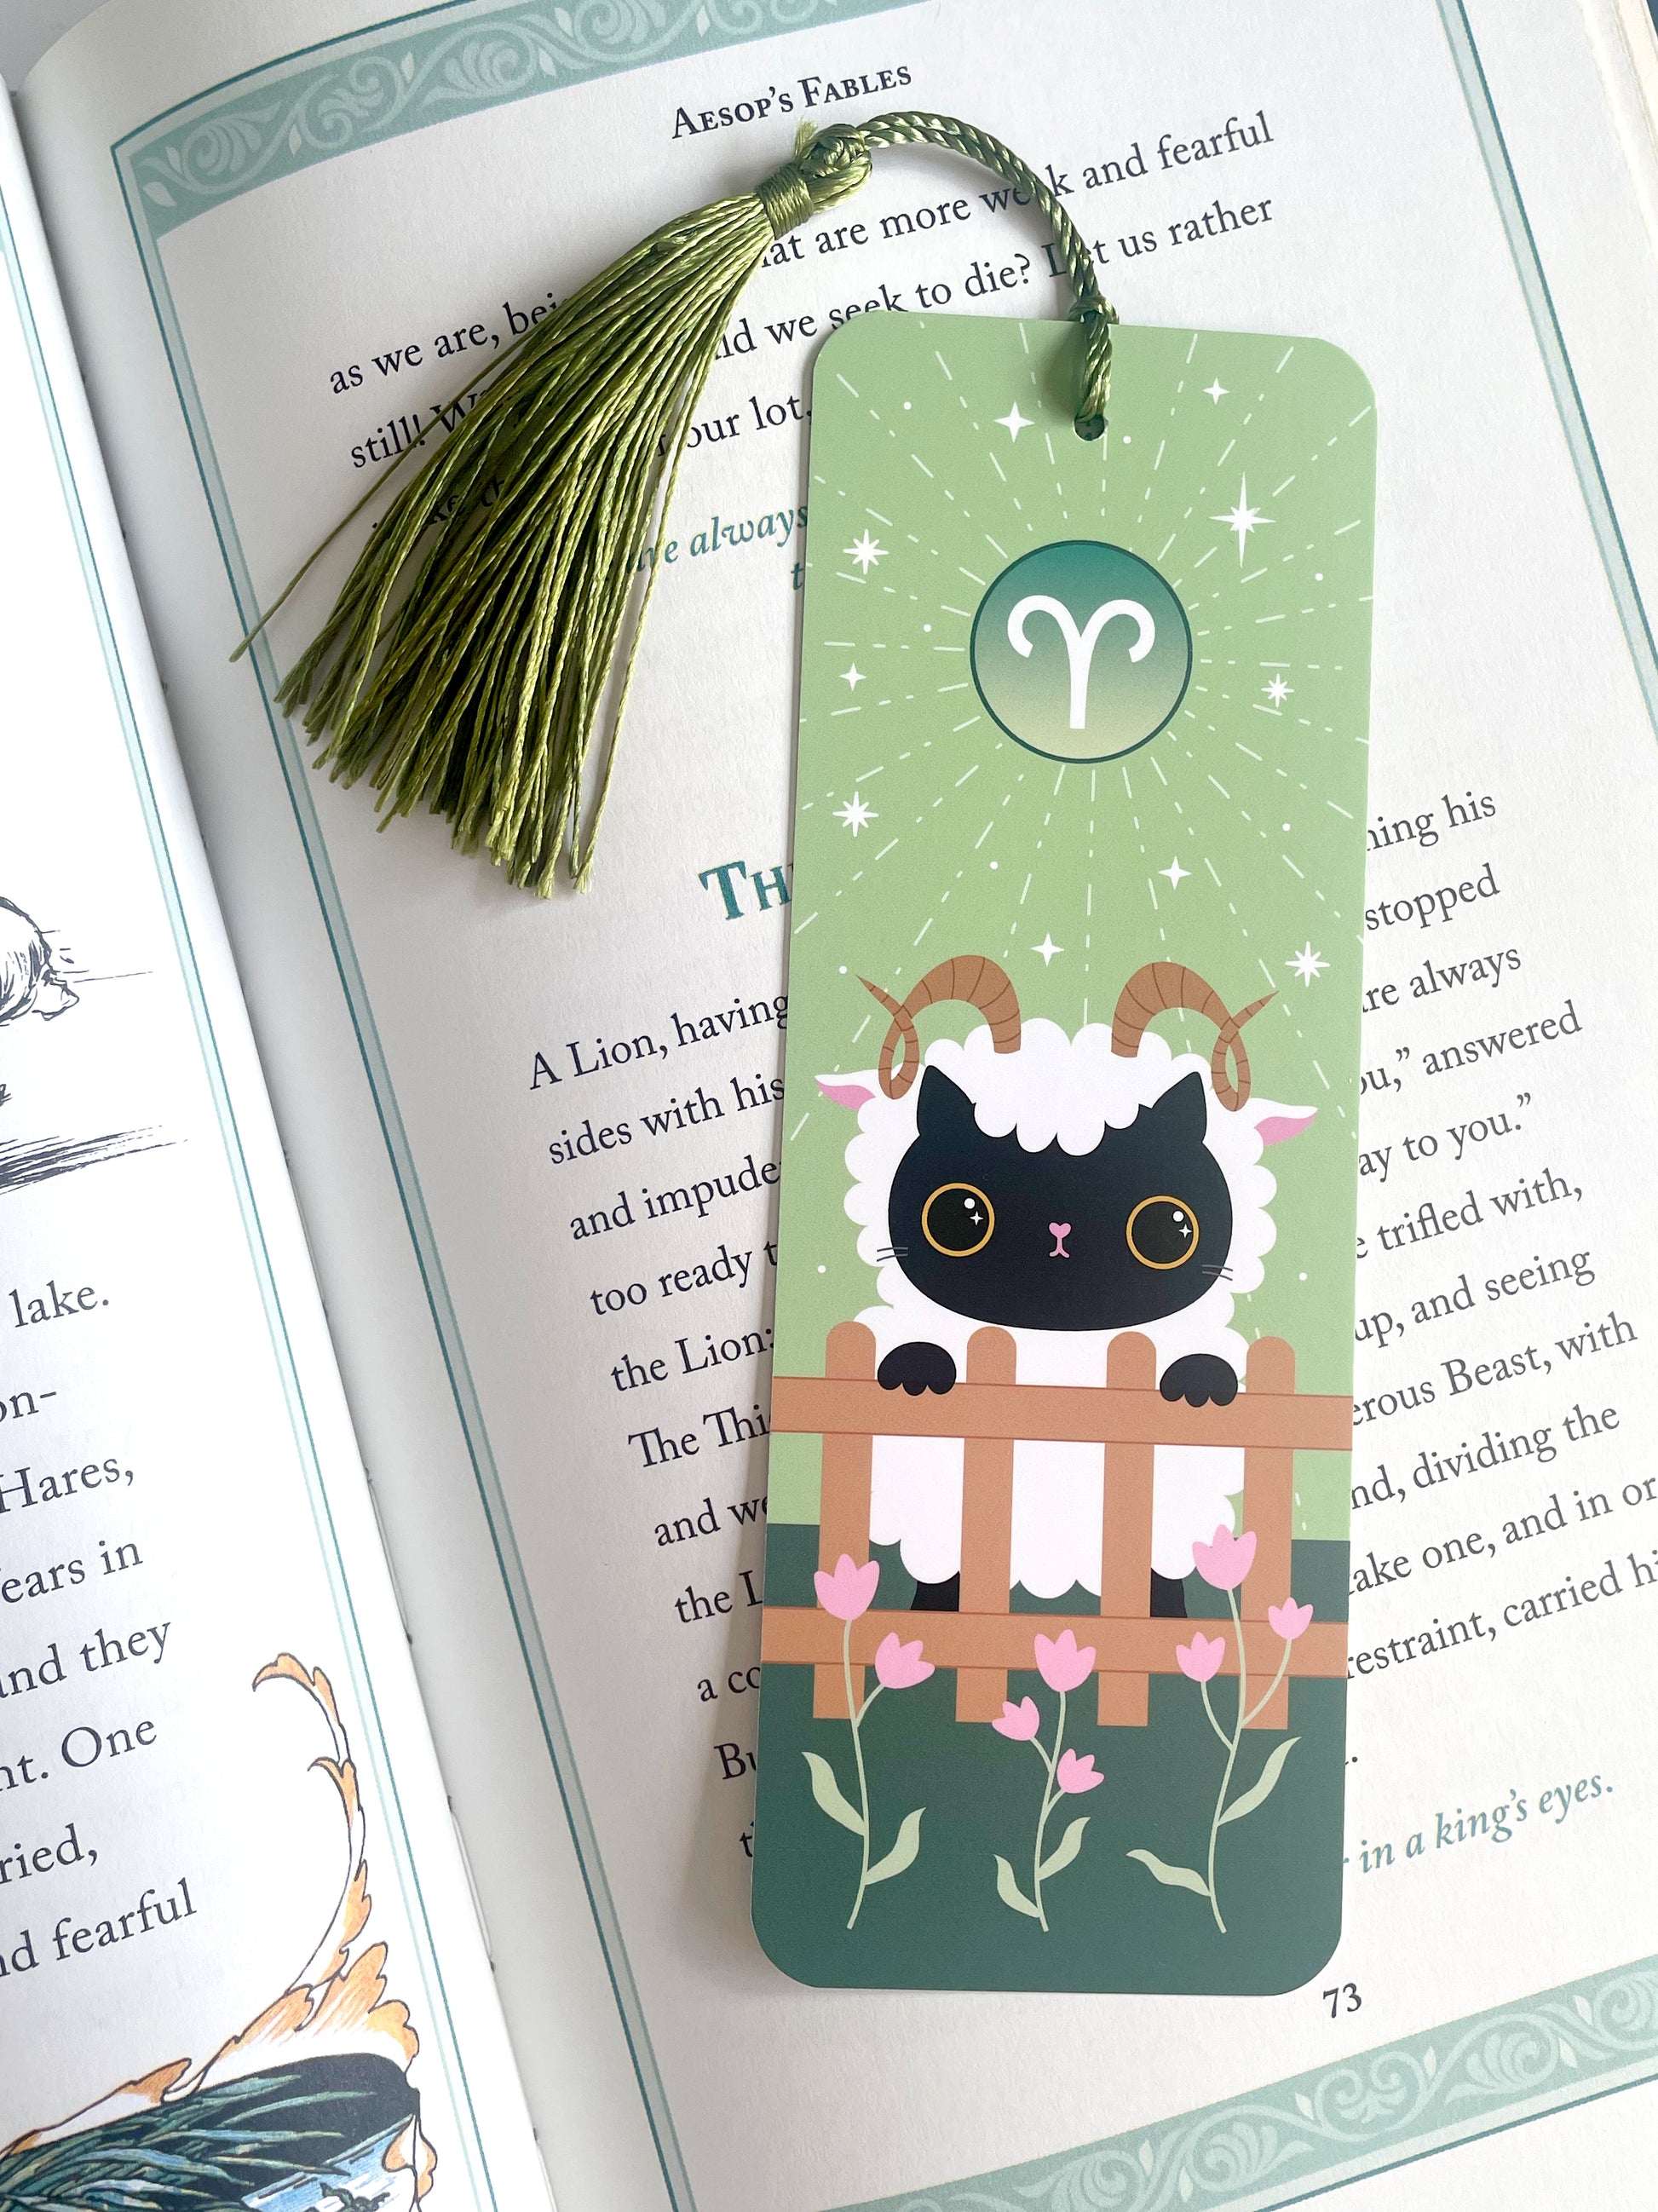 Aries star sign bookmark - cat dressed up as a ram - kawaii srtyle - bookmark inside a book